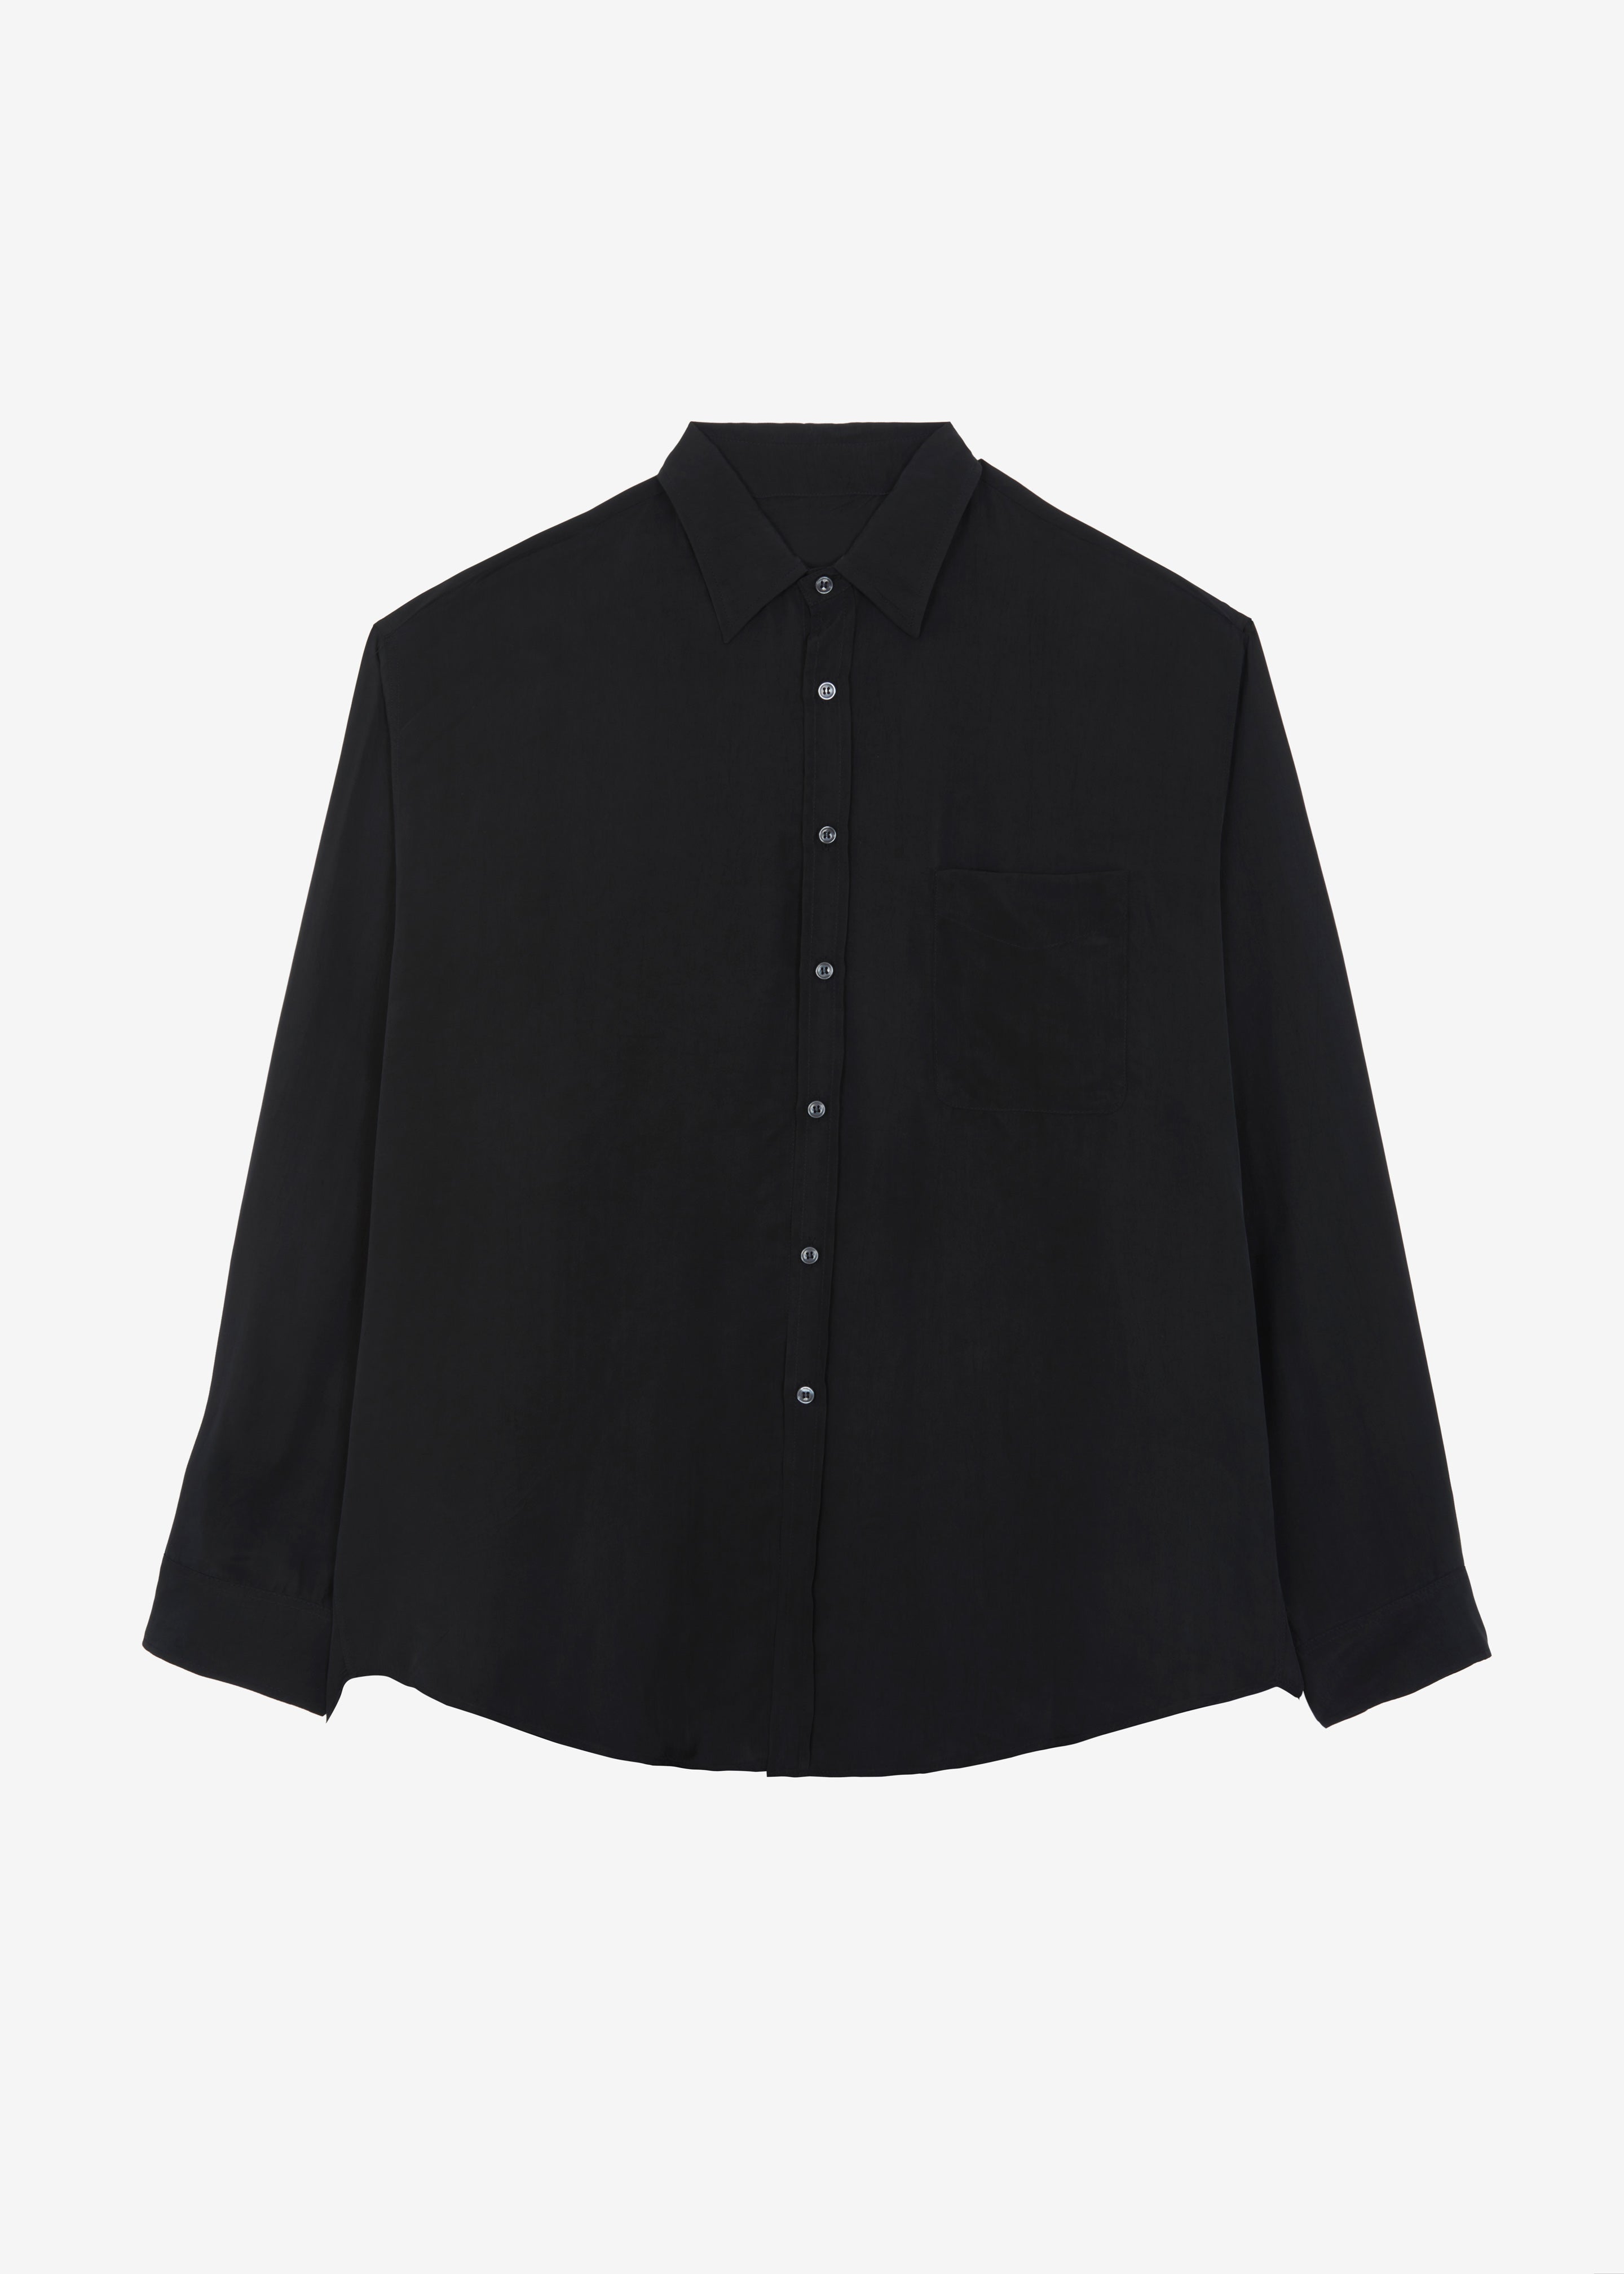 Leland Silky Shirt - Black - 8